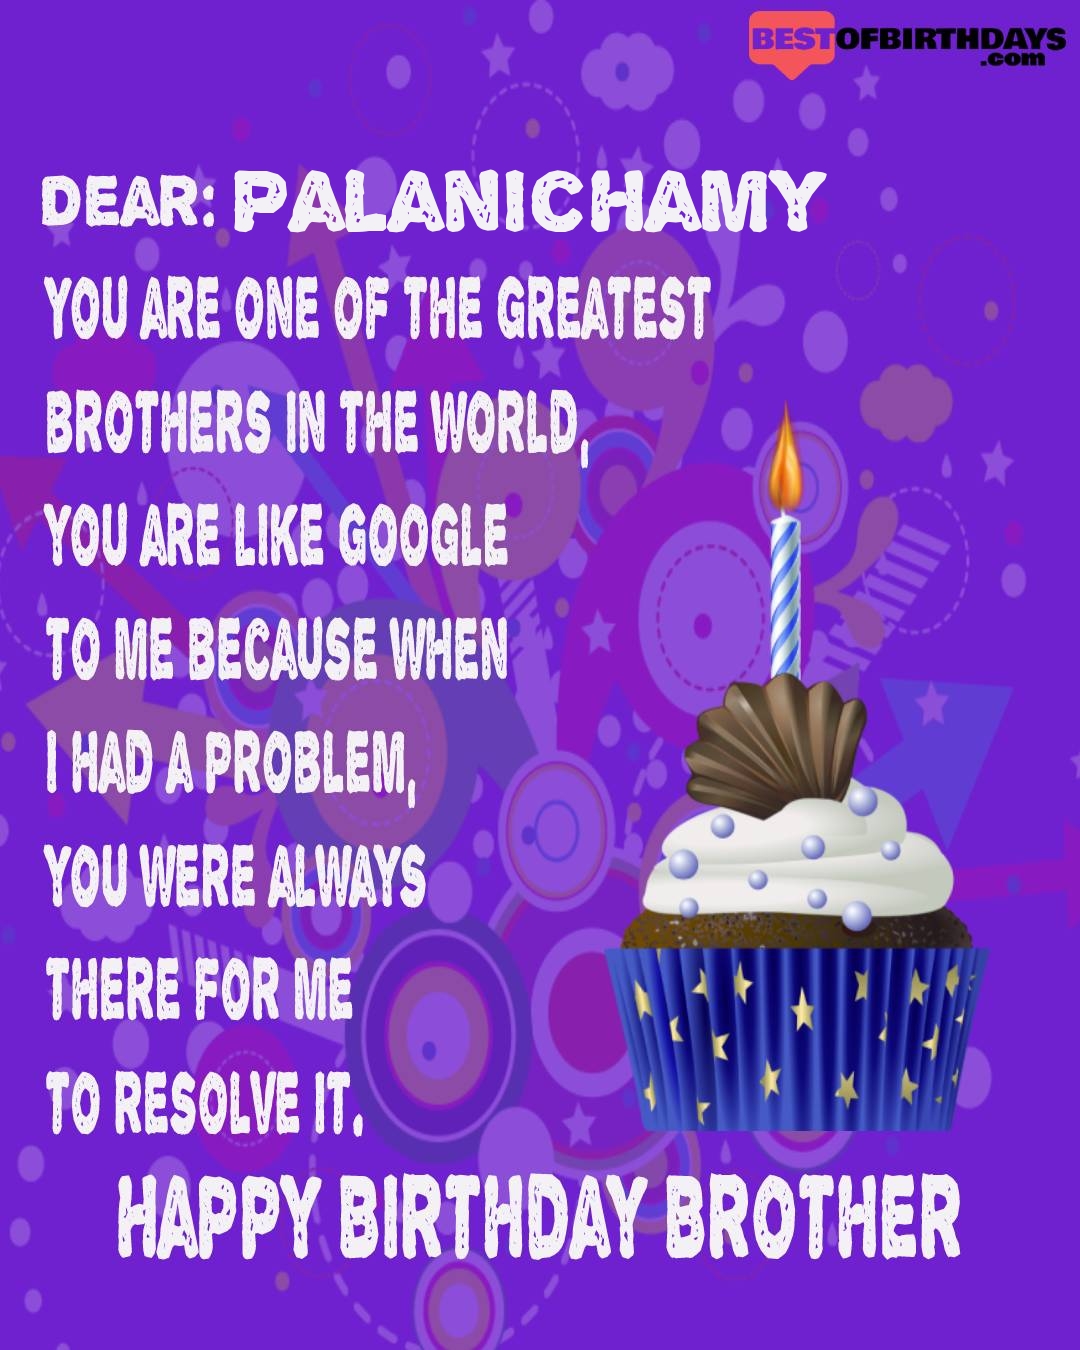 Happy birthday palanichamy bhai brother bro